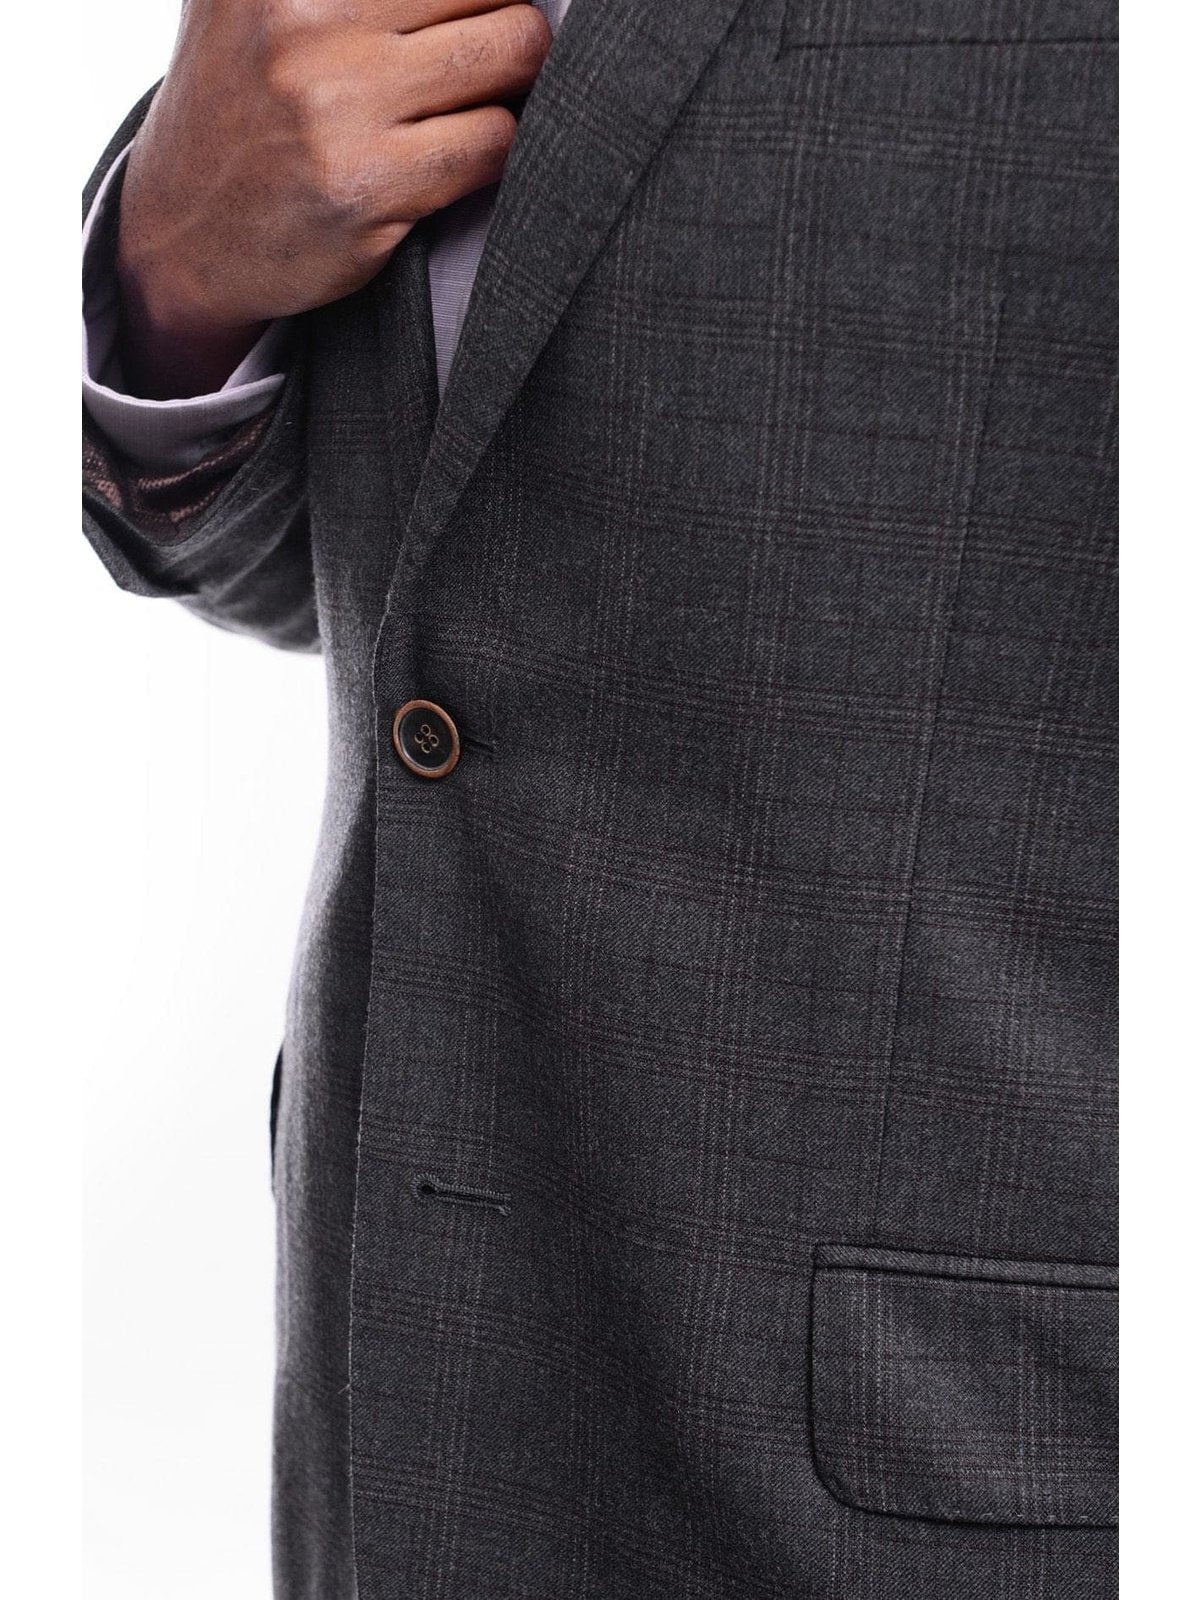 Arthur Black BLAZERS Arthur Black Classic Fit Gray With Brown Plaid Two Button Wool Blazer Sportcoat